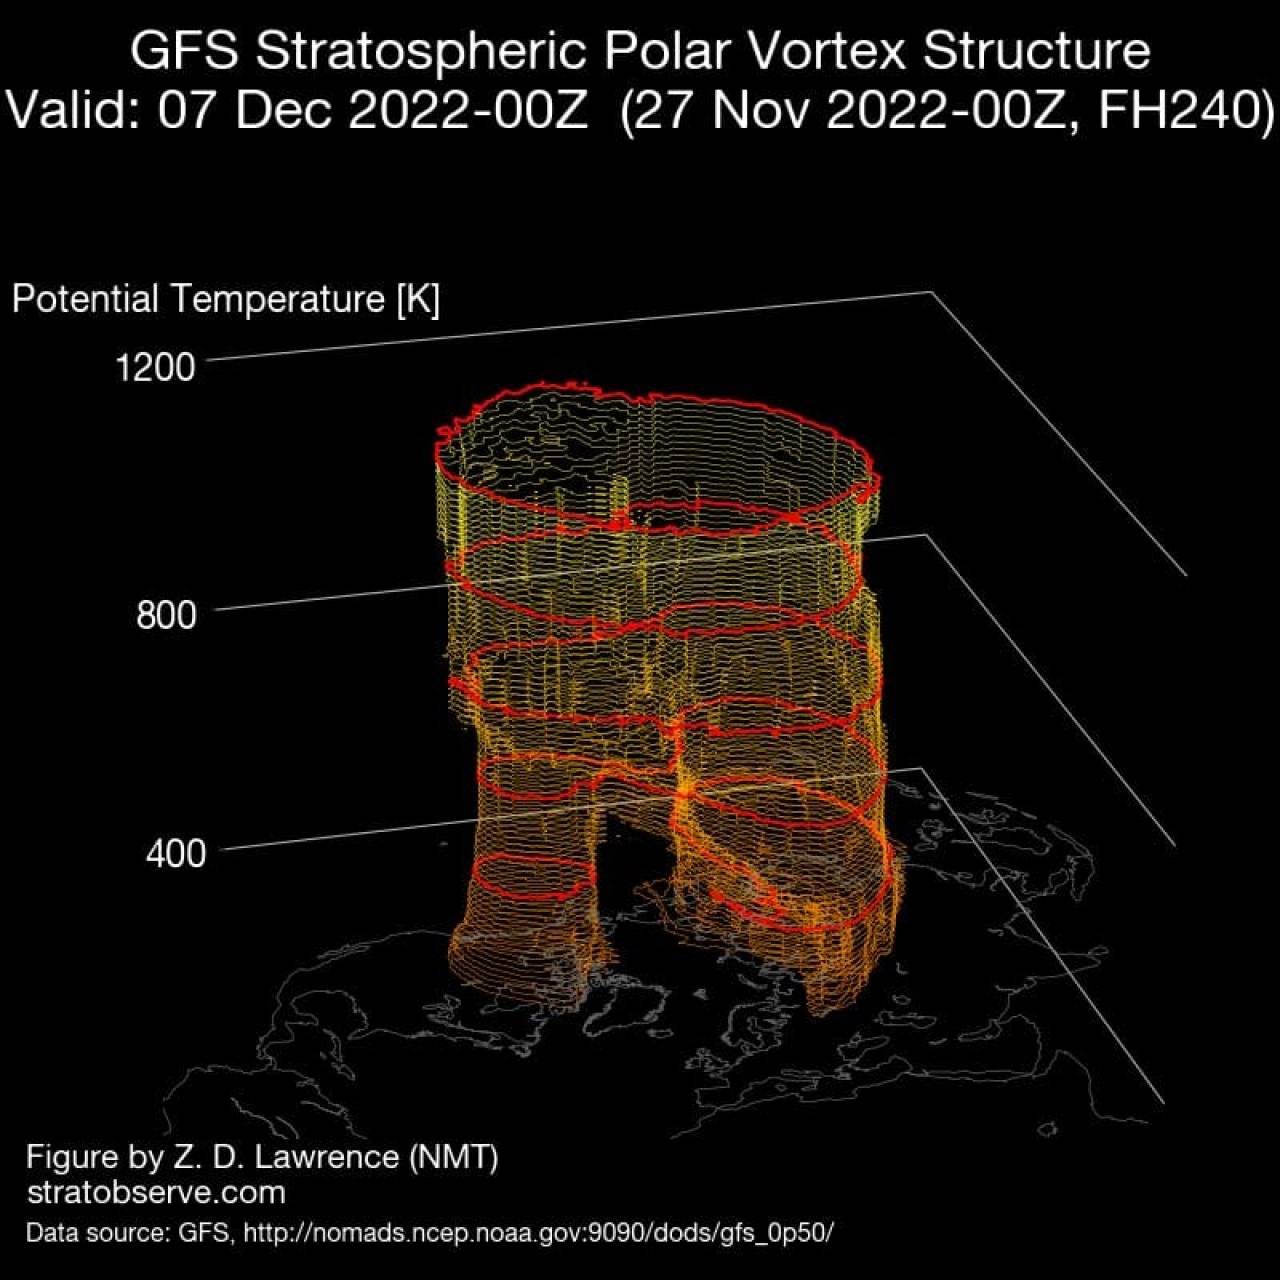 vortice stratosferico in 3d, fonte stratobserve